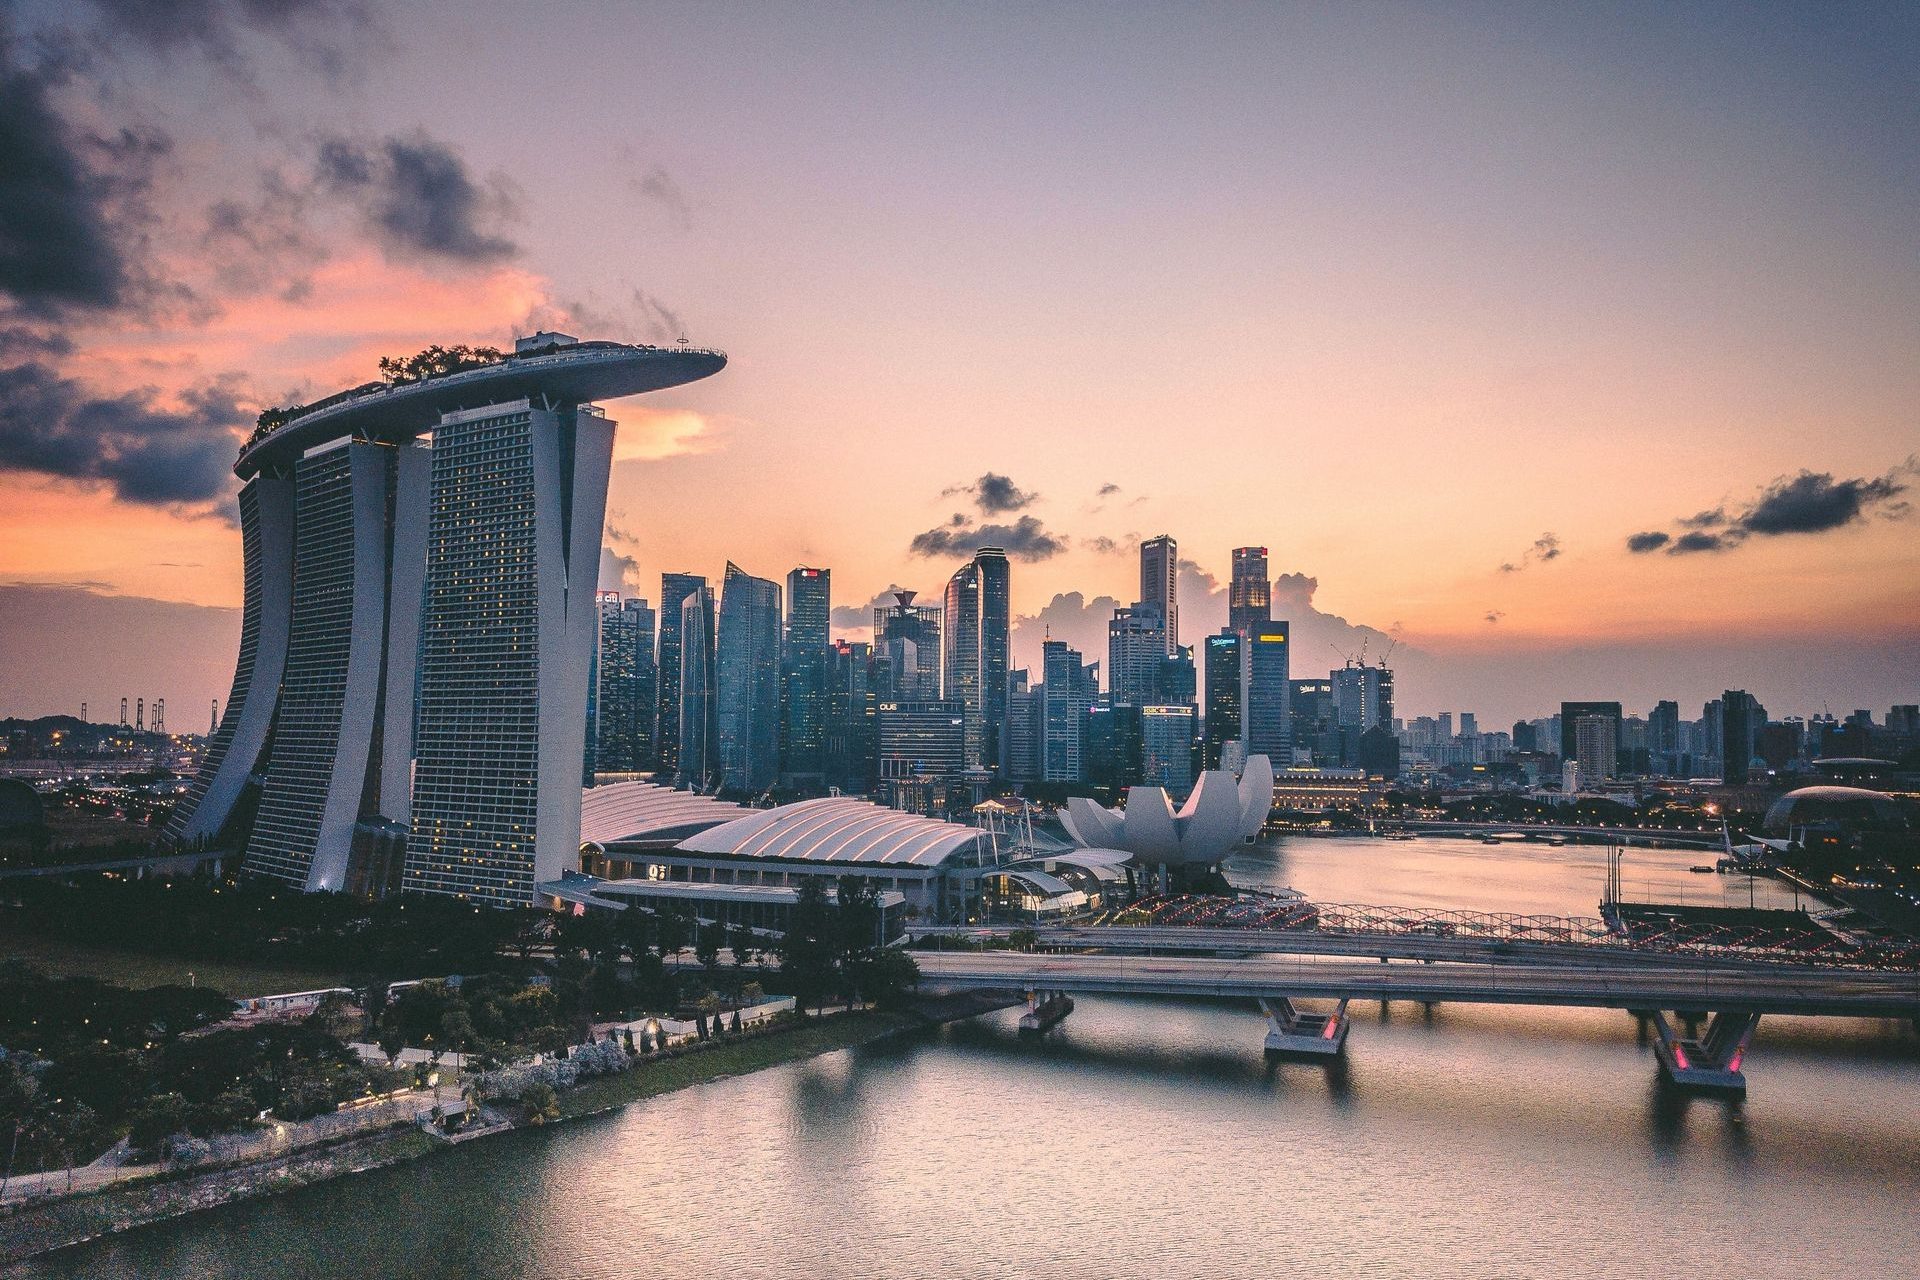 5# Singapore (249,800 millionaires)